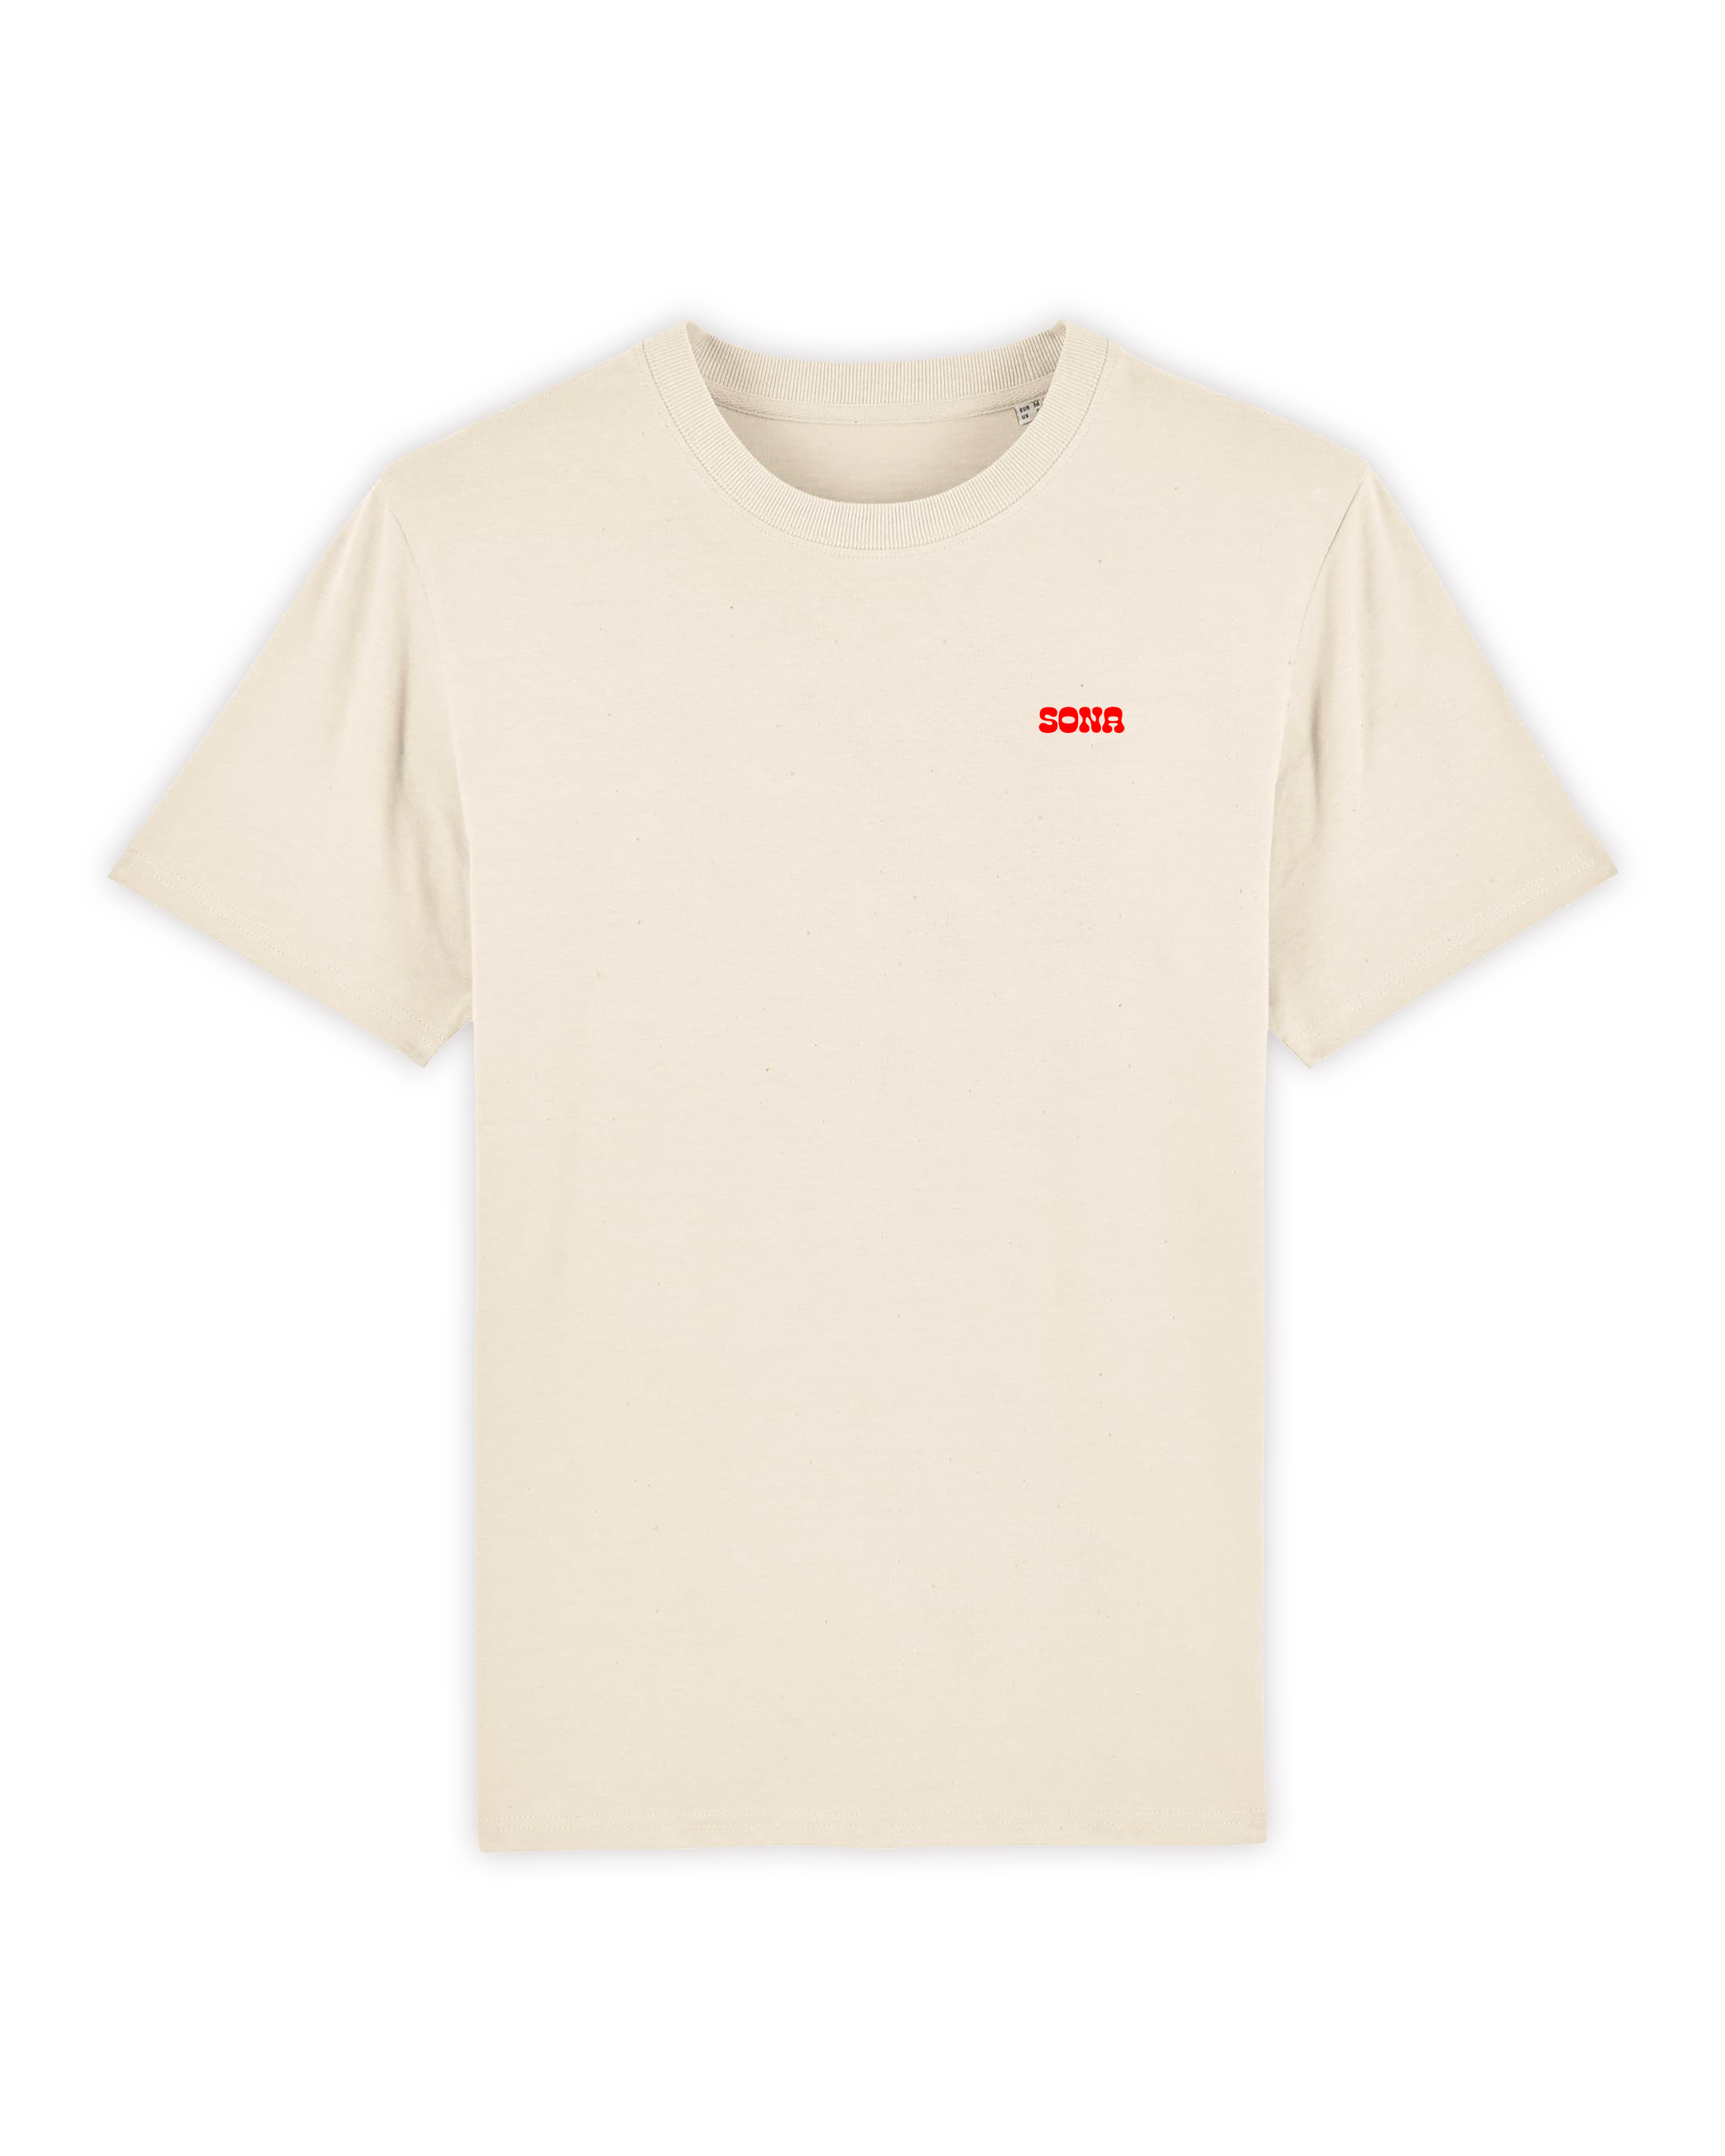 Peann T-Shirt - Sona Design